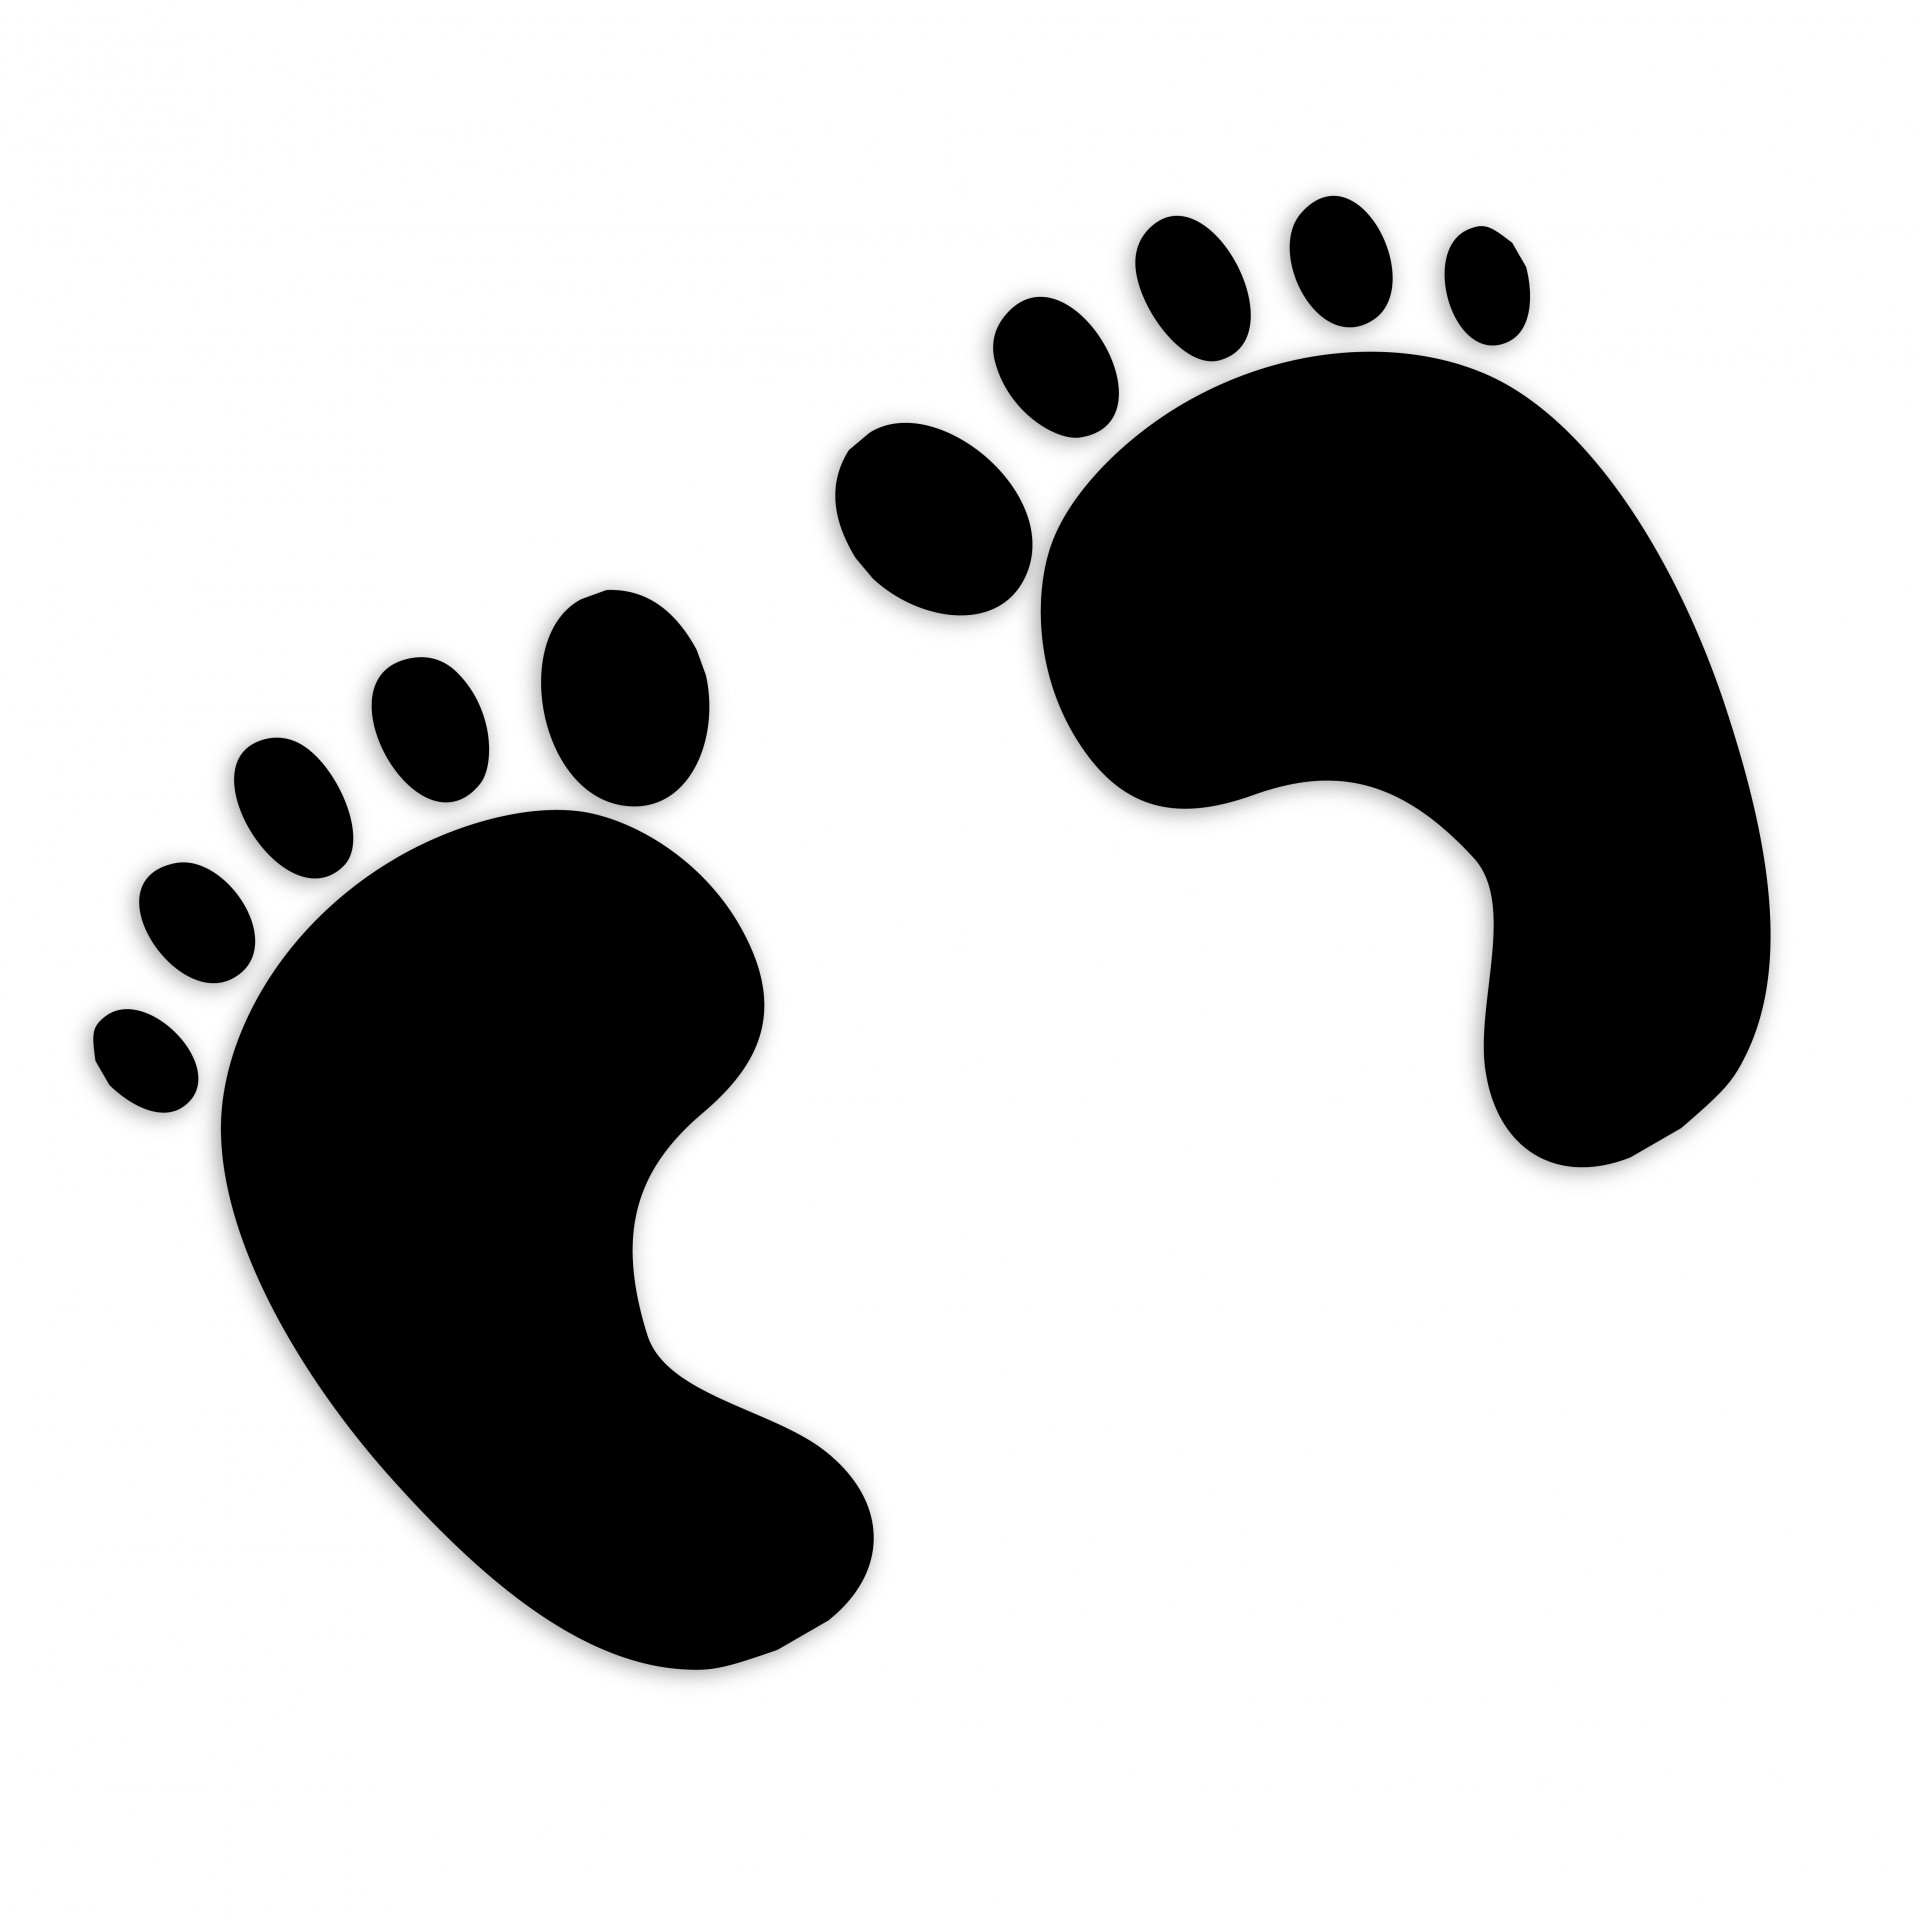 Footprints Images - Public Domain Pictures - Page 1